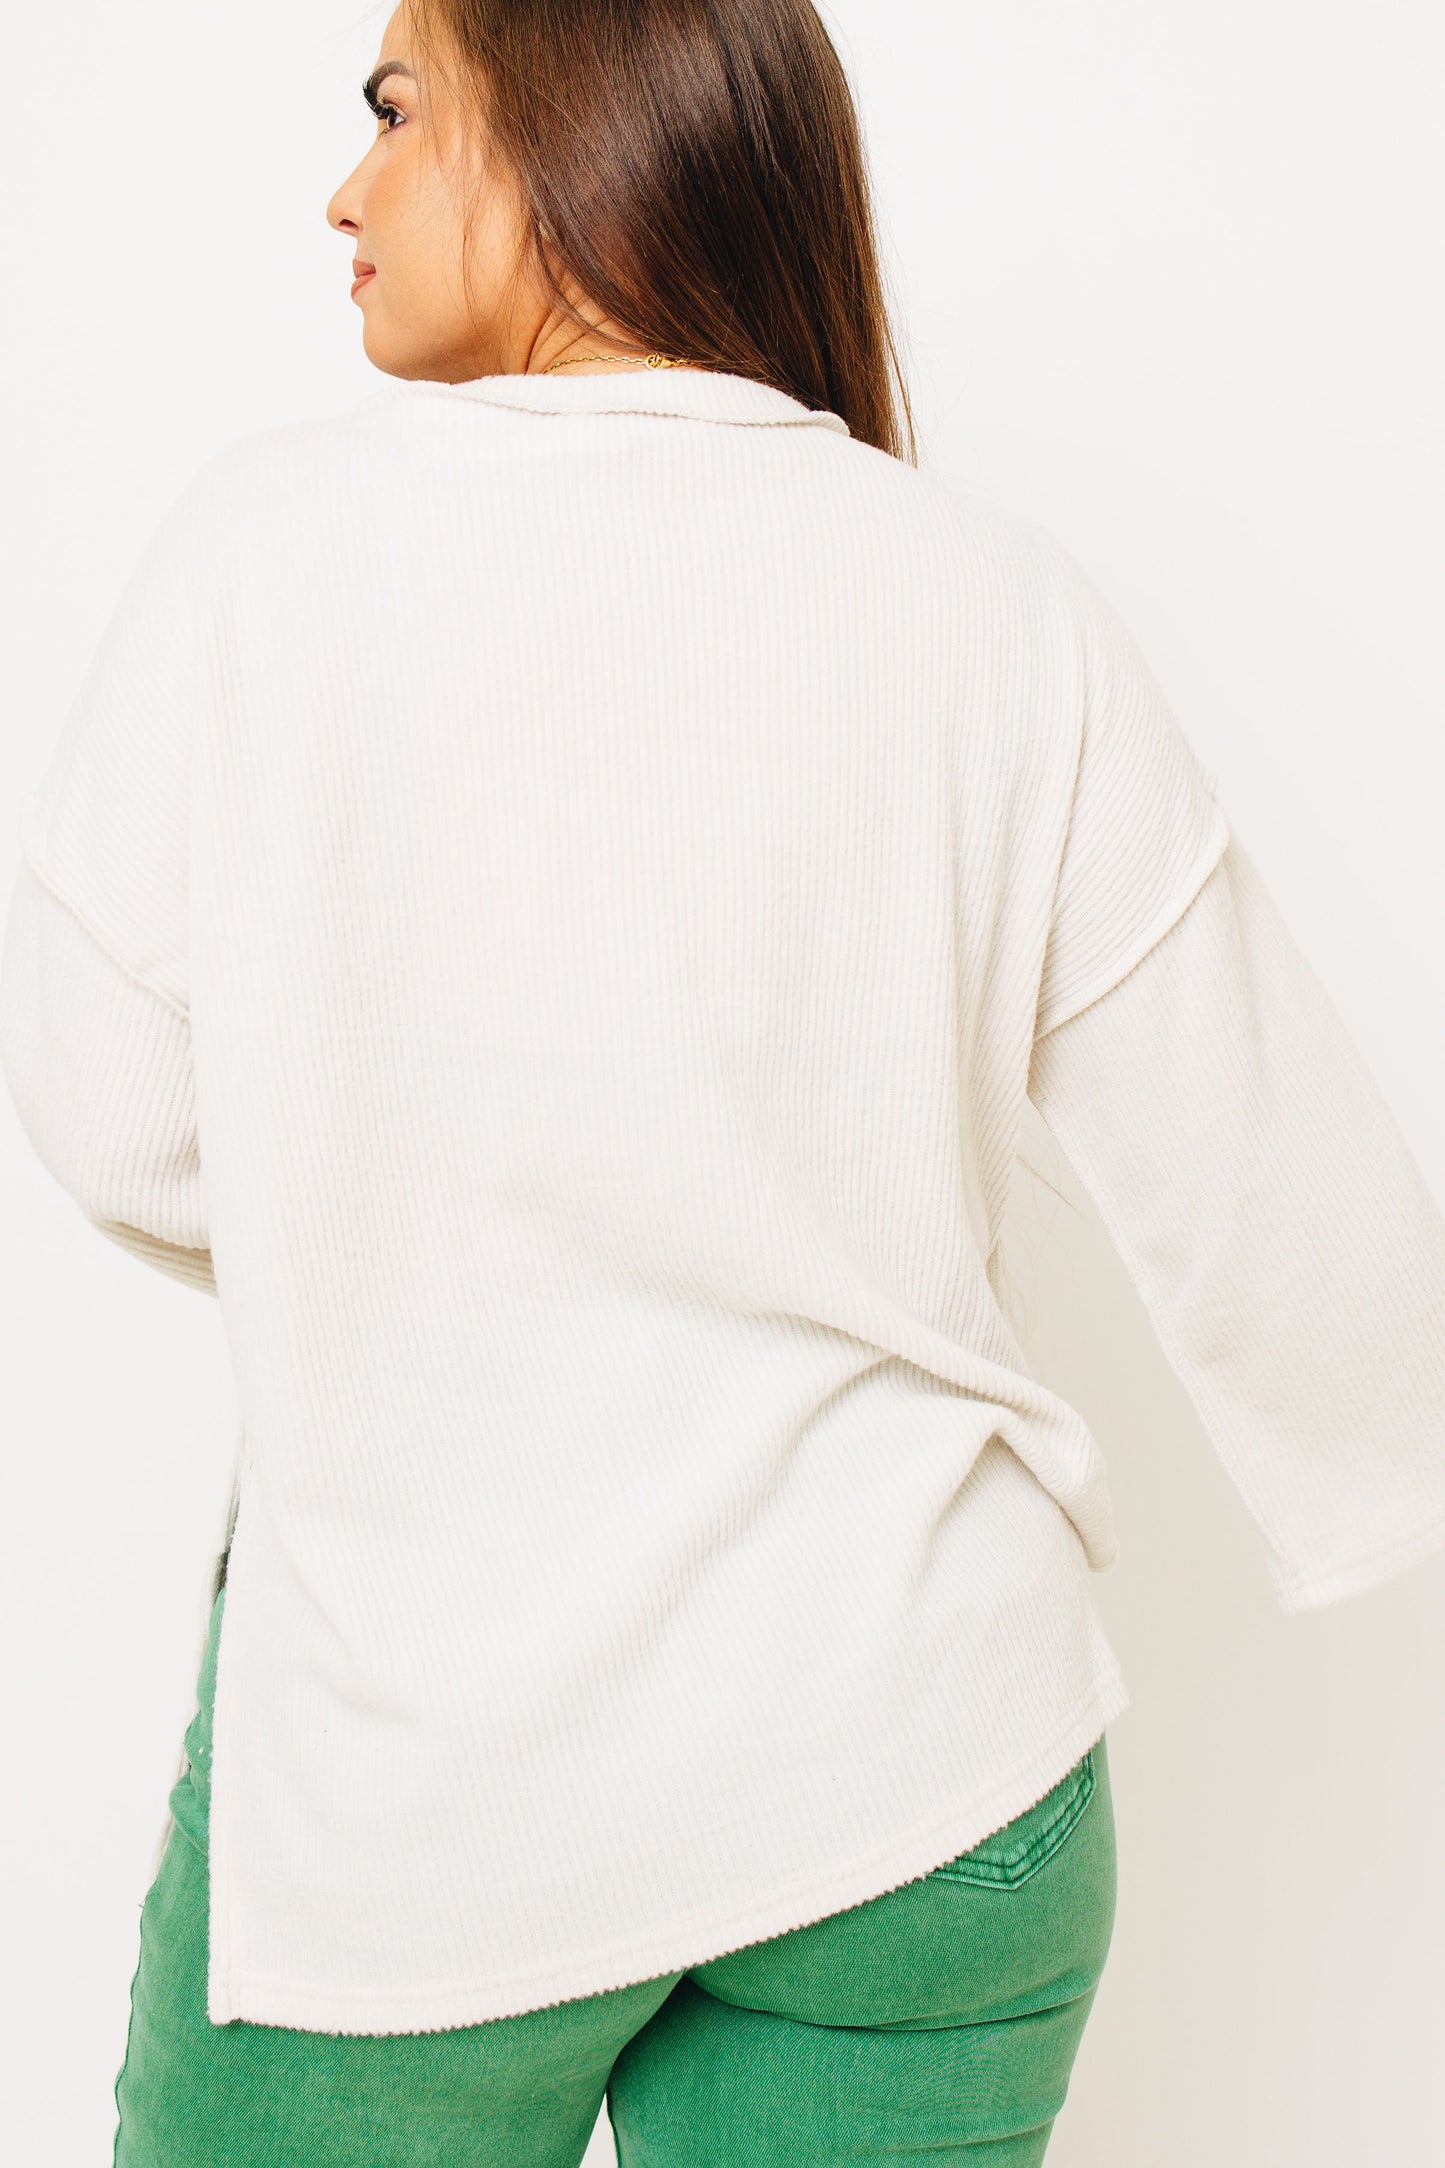 Doorbuster - Classic Hacci Henley Sweater (S to XL)